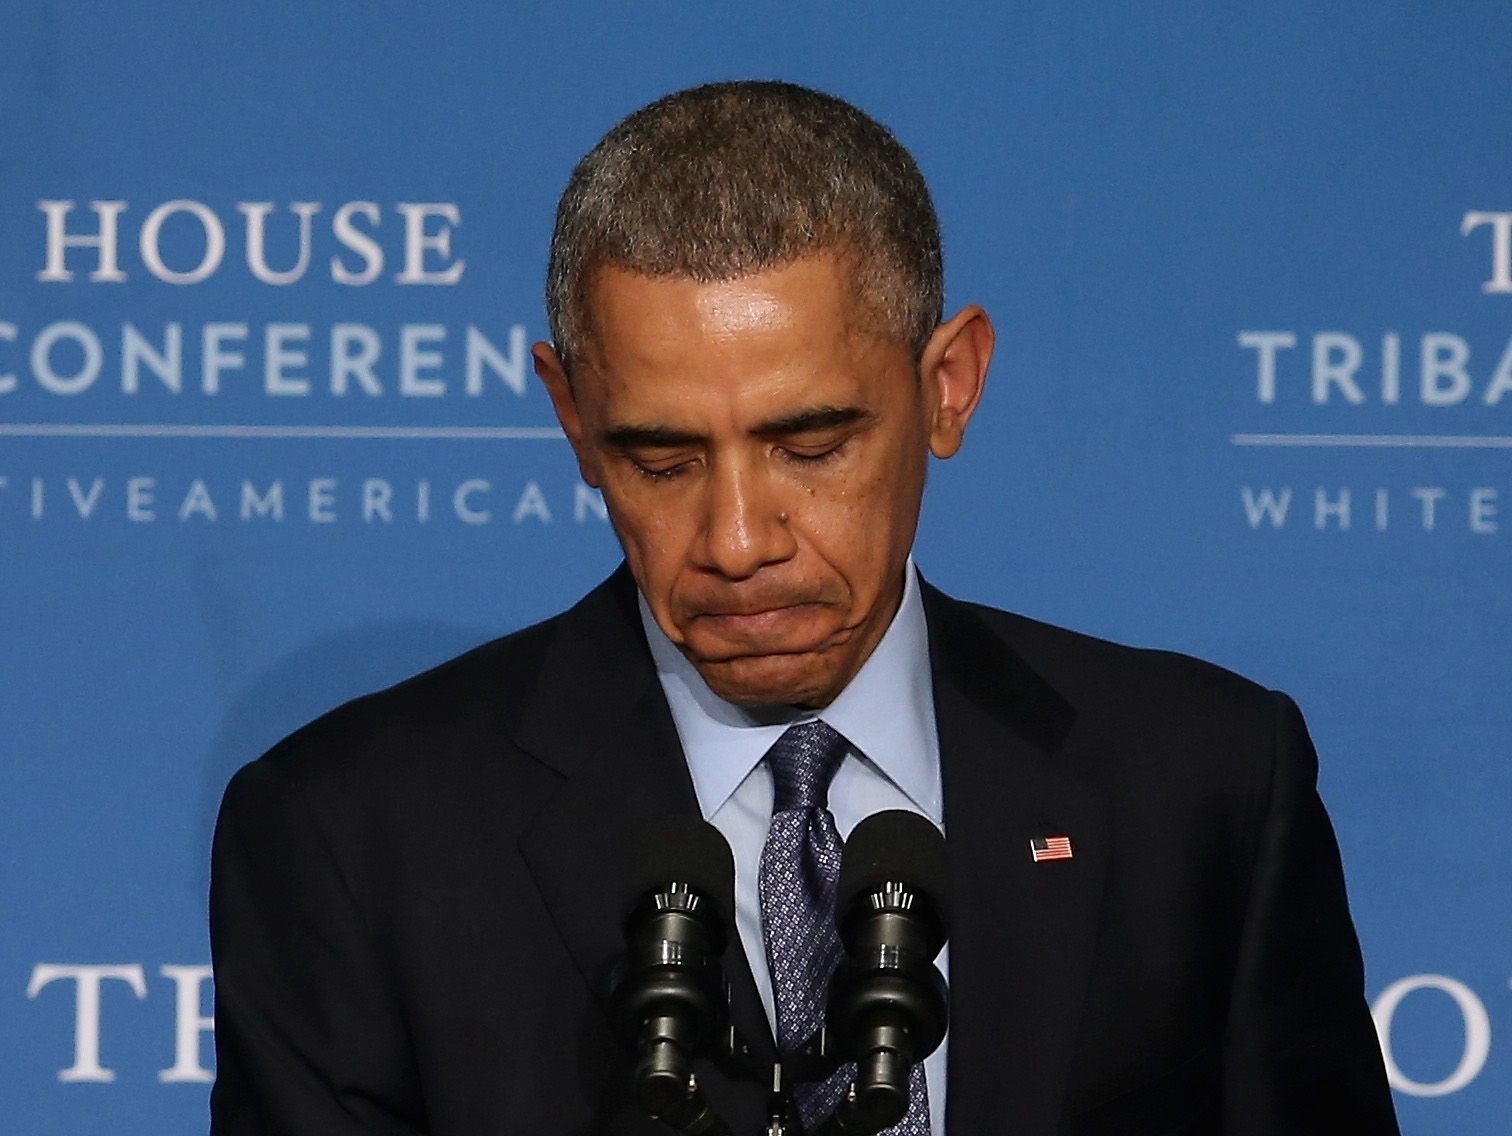 President Barack Obama speaks during The White House Tribal Nations Conference, December 3, 2014 in Washington, DC.